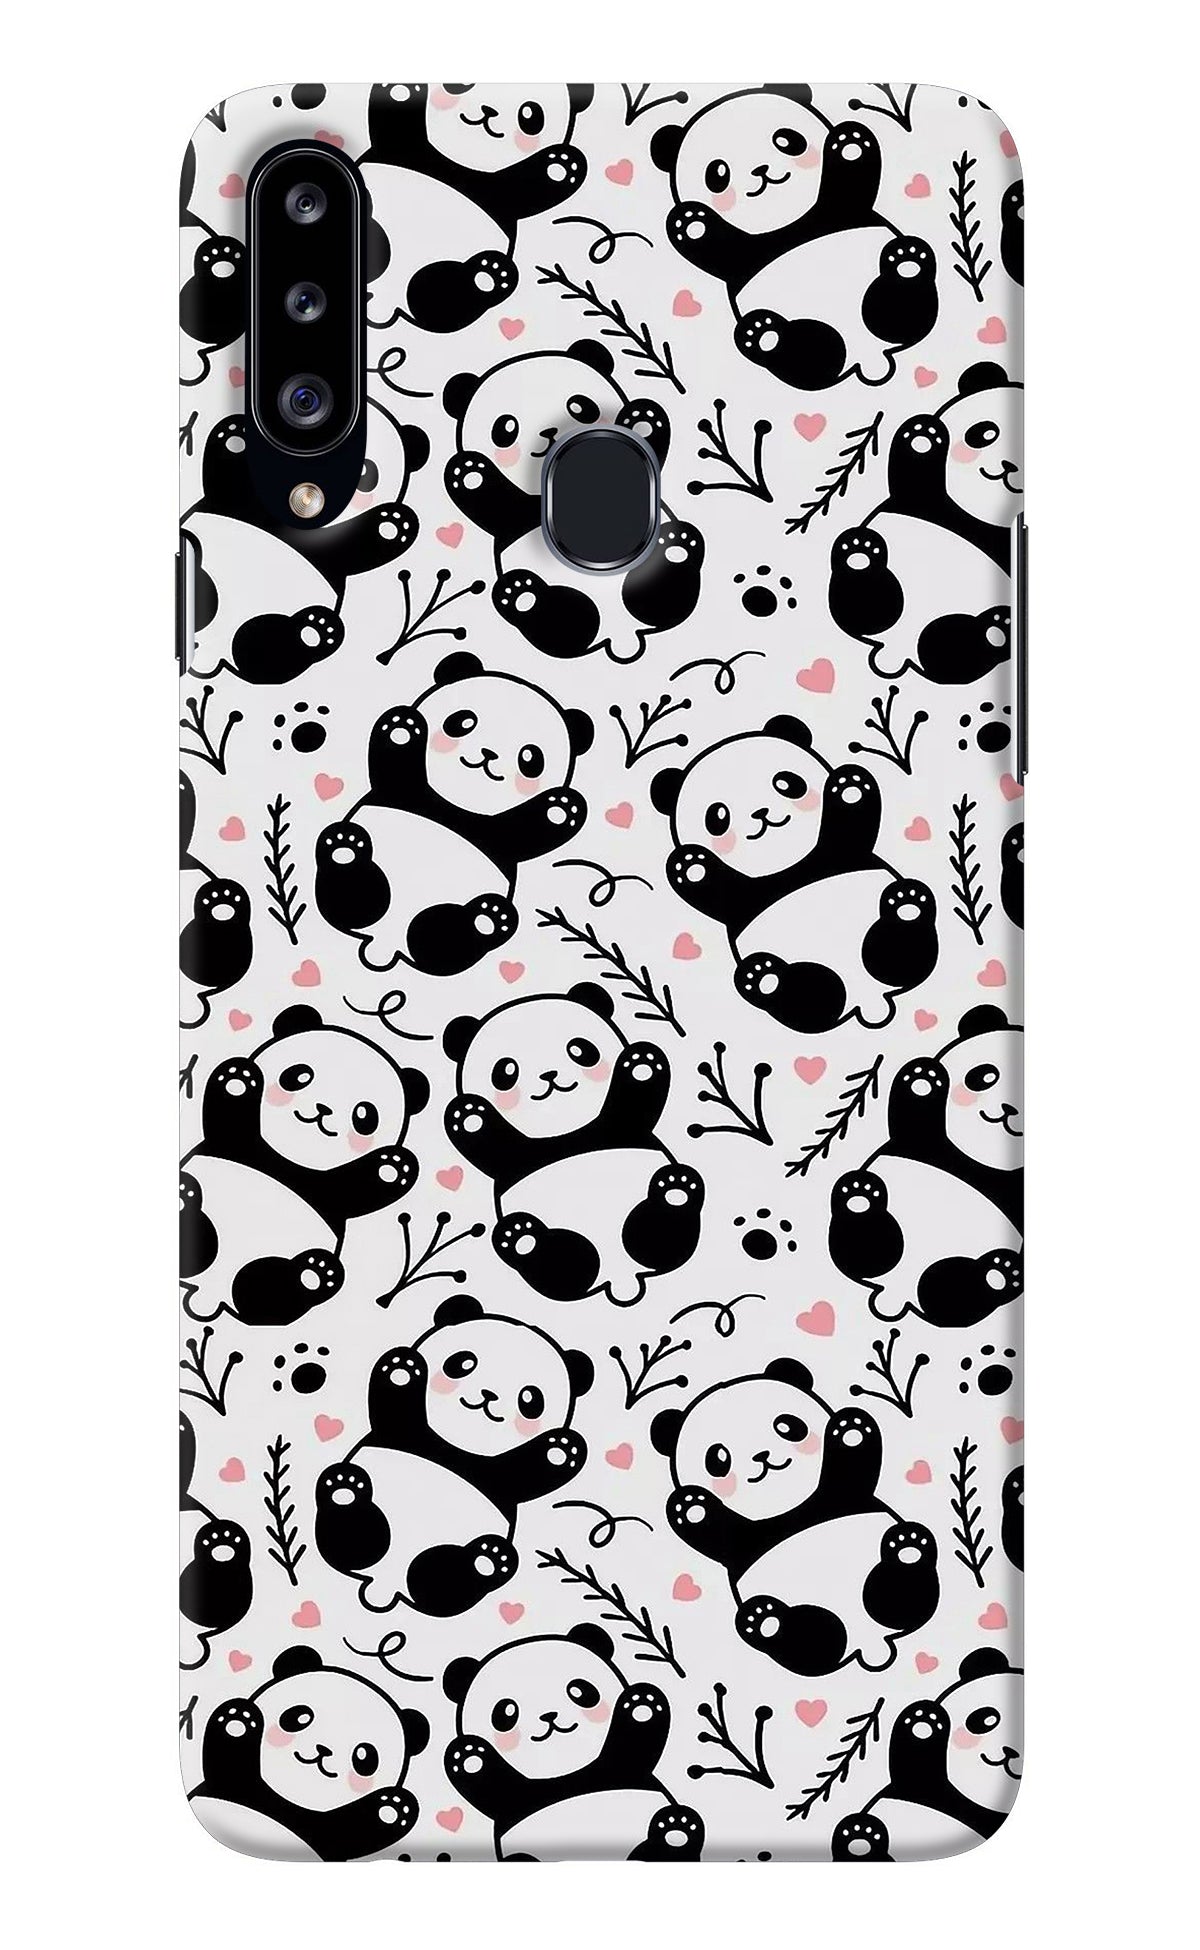 Cute Panda Samsung A20s Back Cover